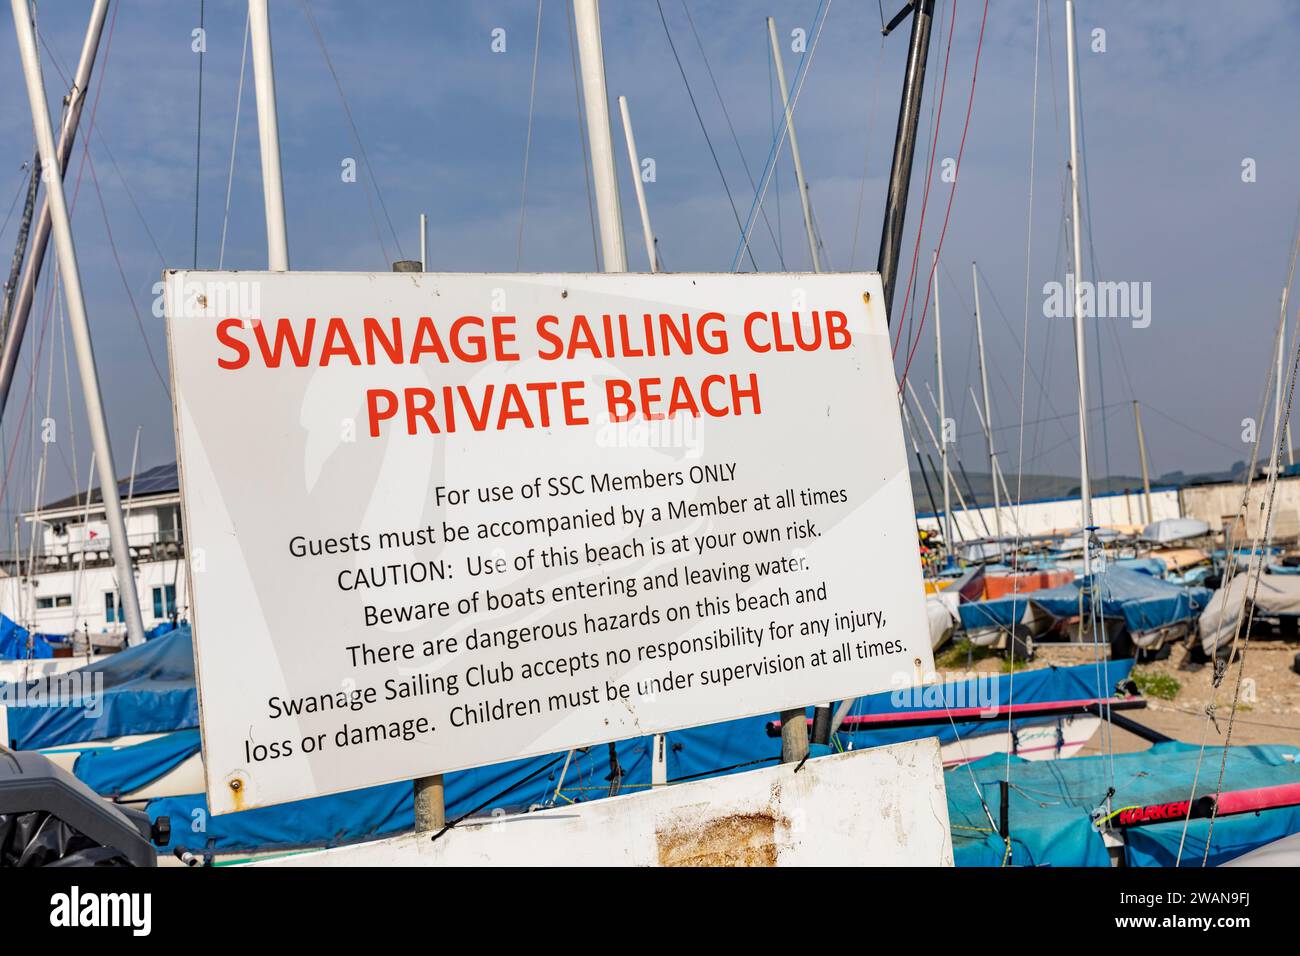 Swanage Dorset England, sailing club with catamaran boats stored at the club,England,UK,2023 Stock Photo